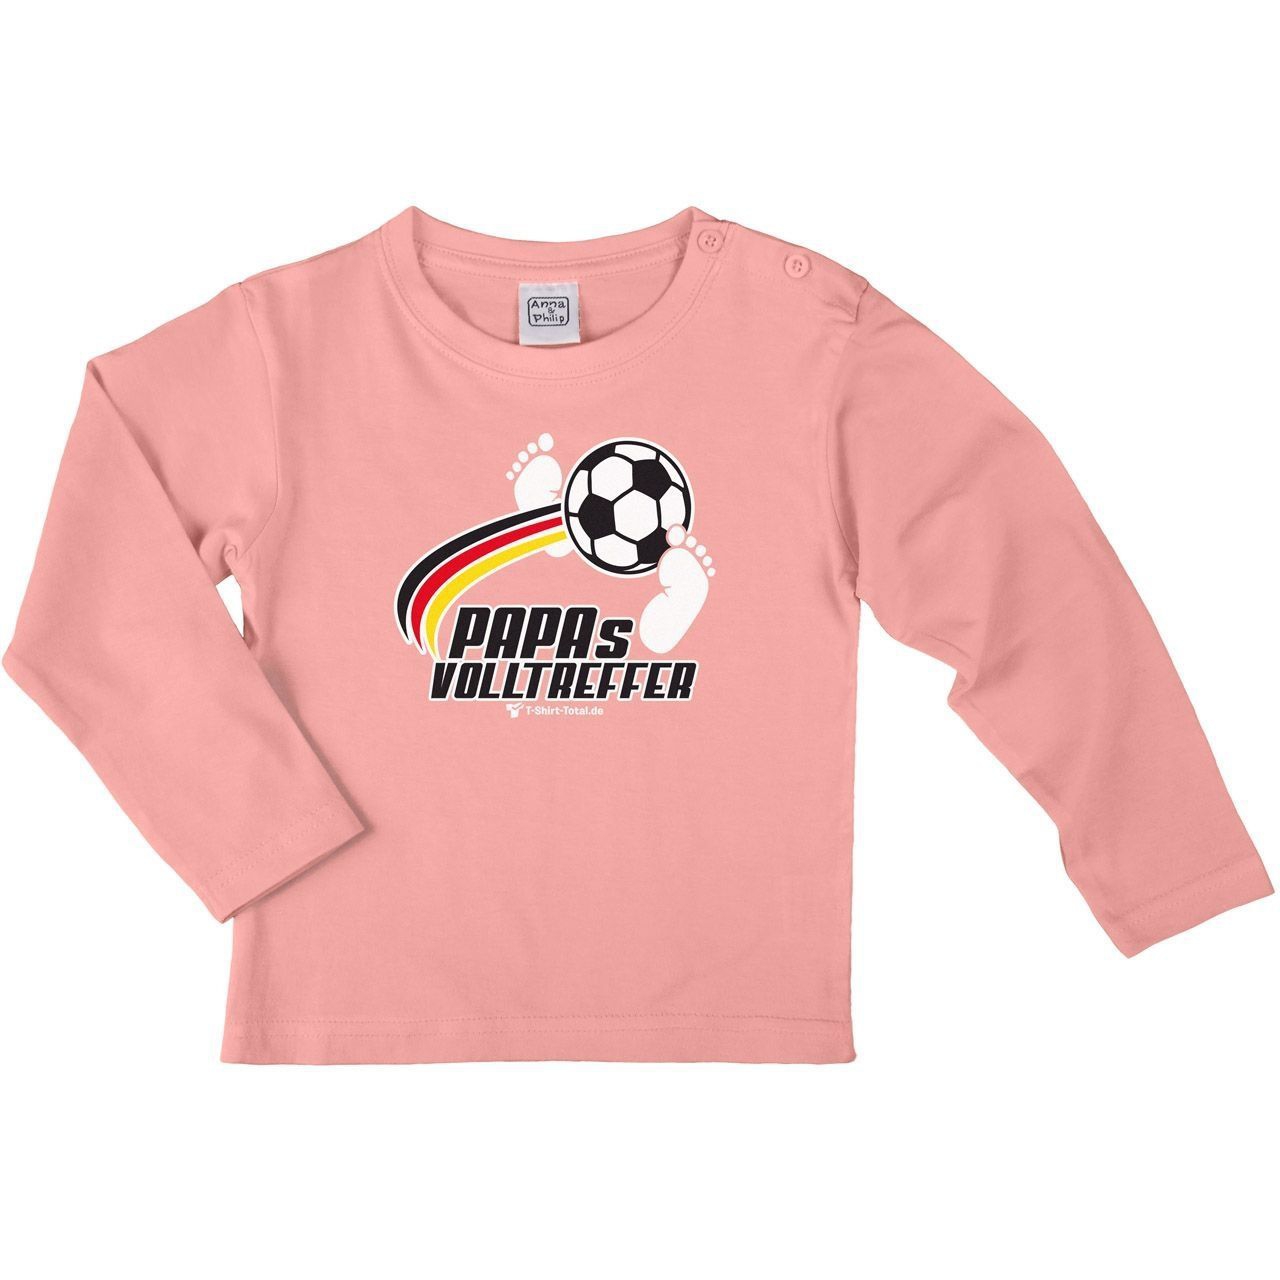 Papas Volltreffer Kinder Langarm Shirt rosa 104